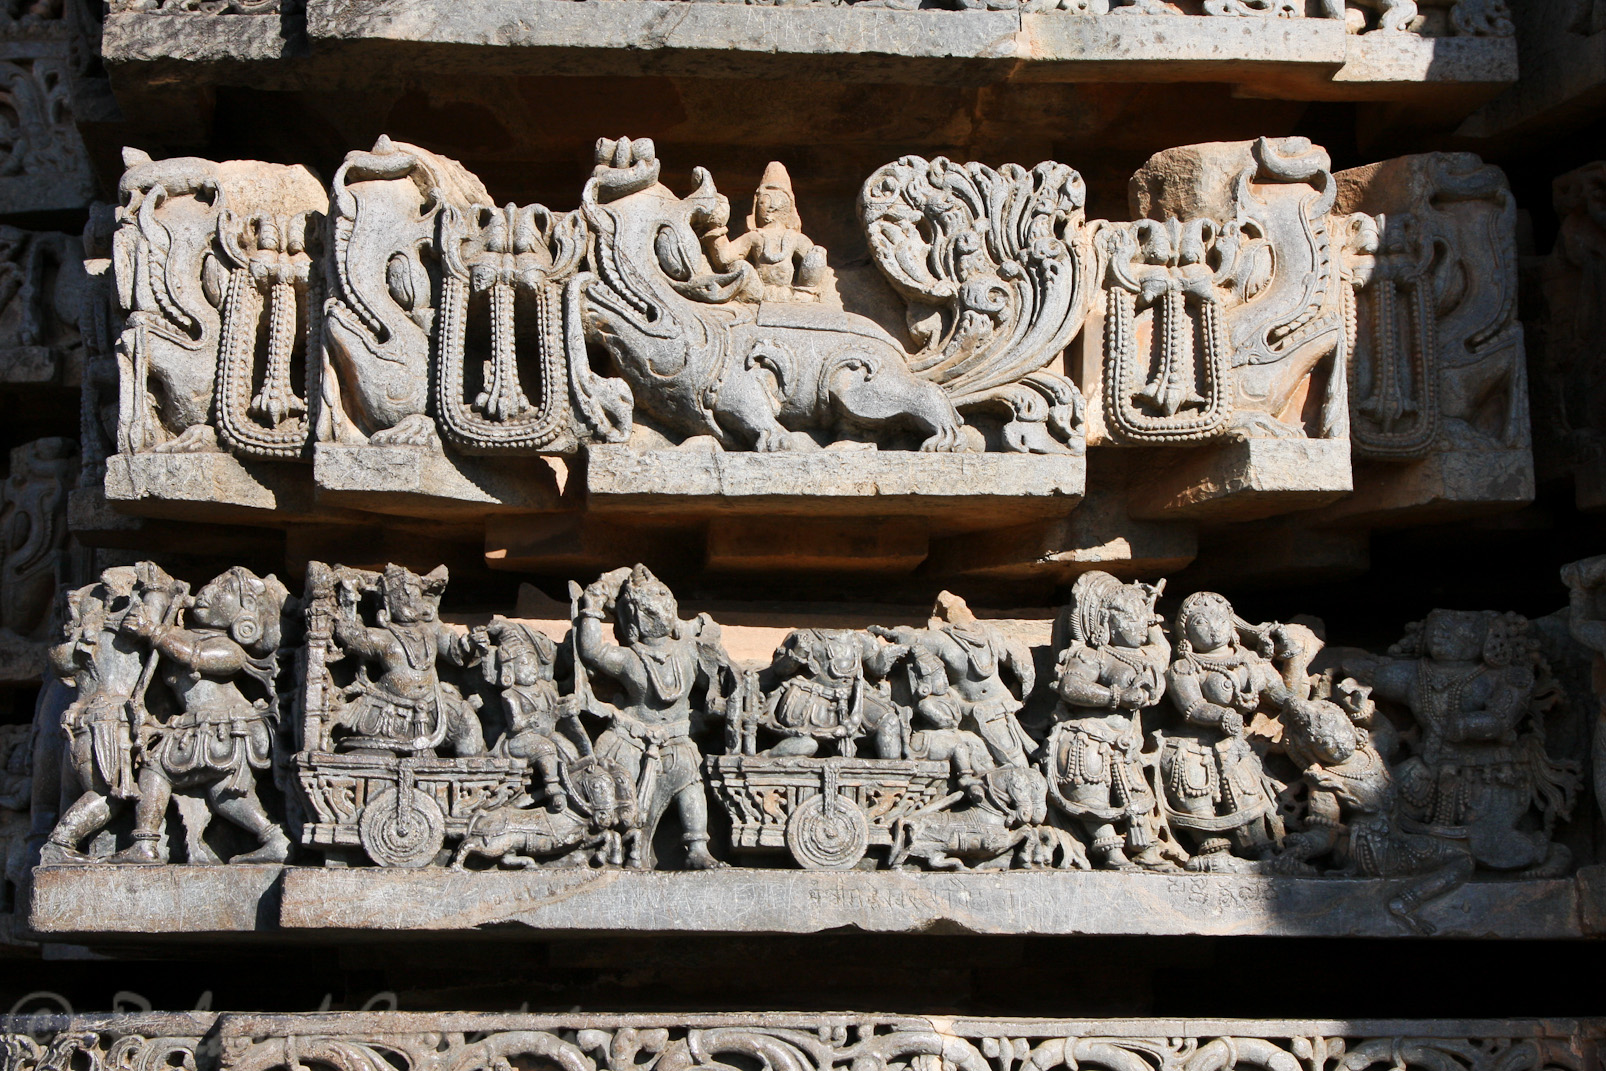 Halebid, temple de Hoysaleswara: Extrait du Mahabharata